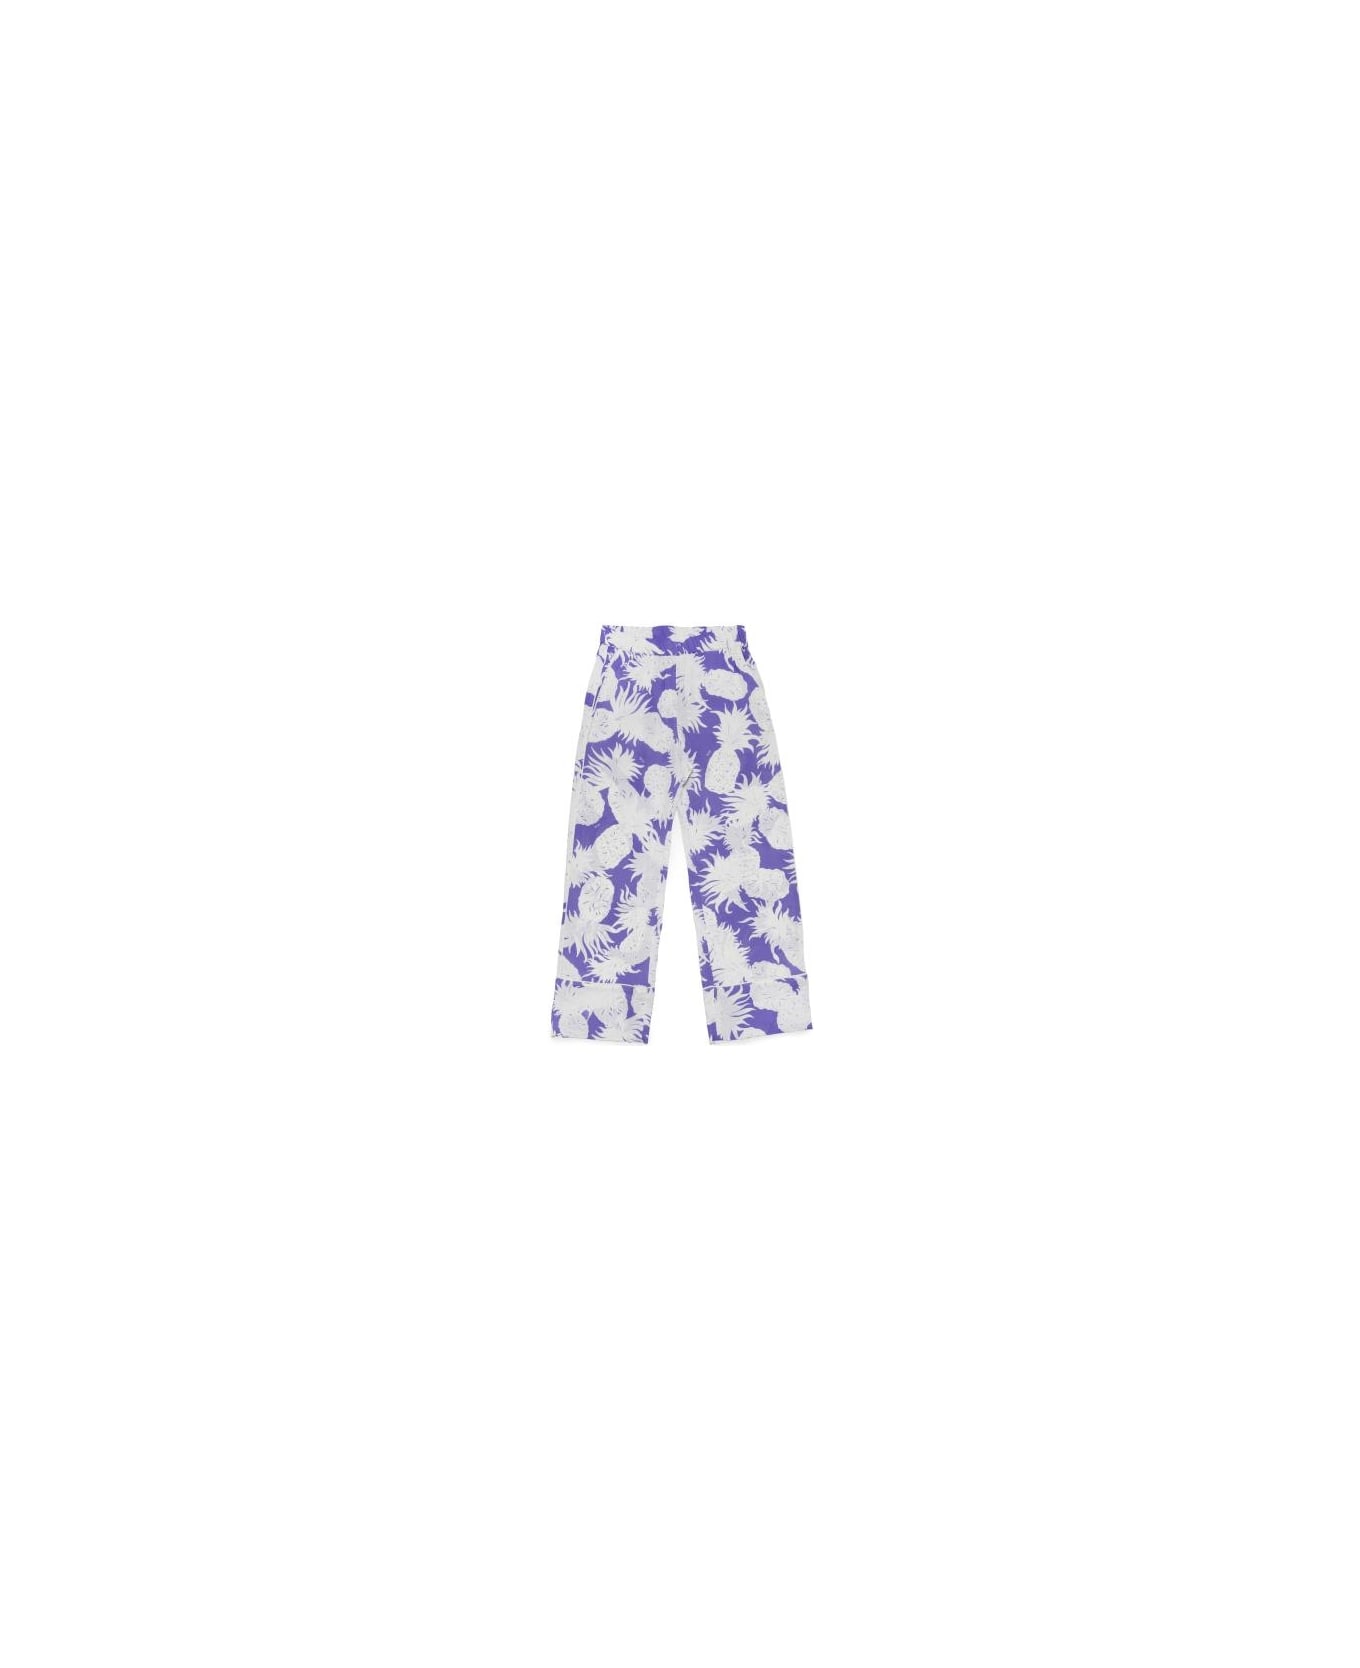 N.21 Pantaloni Con Stampa - Violet ボトムス